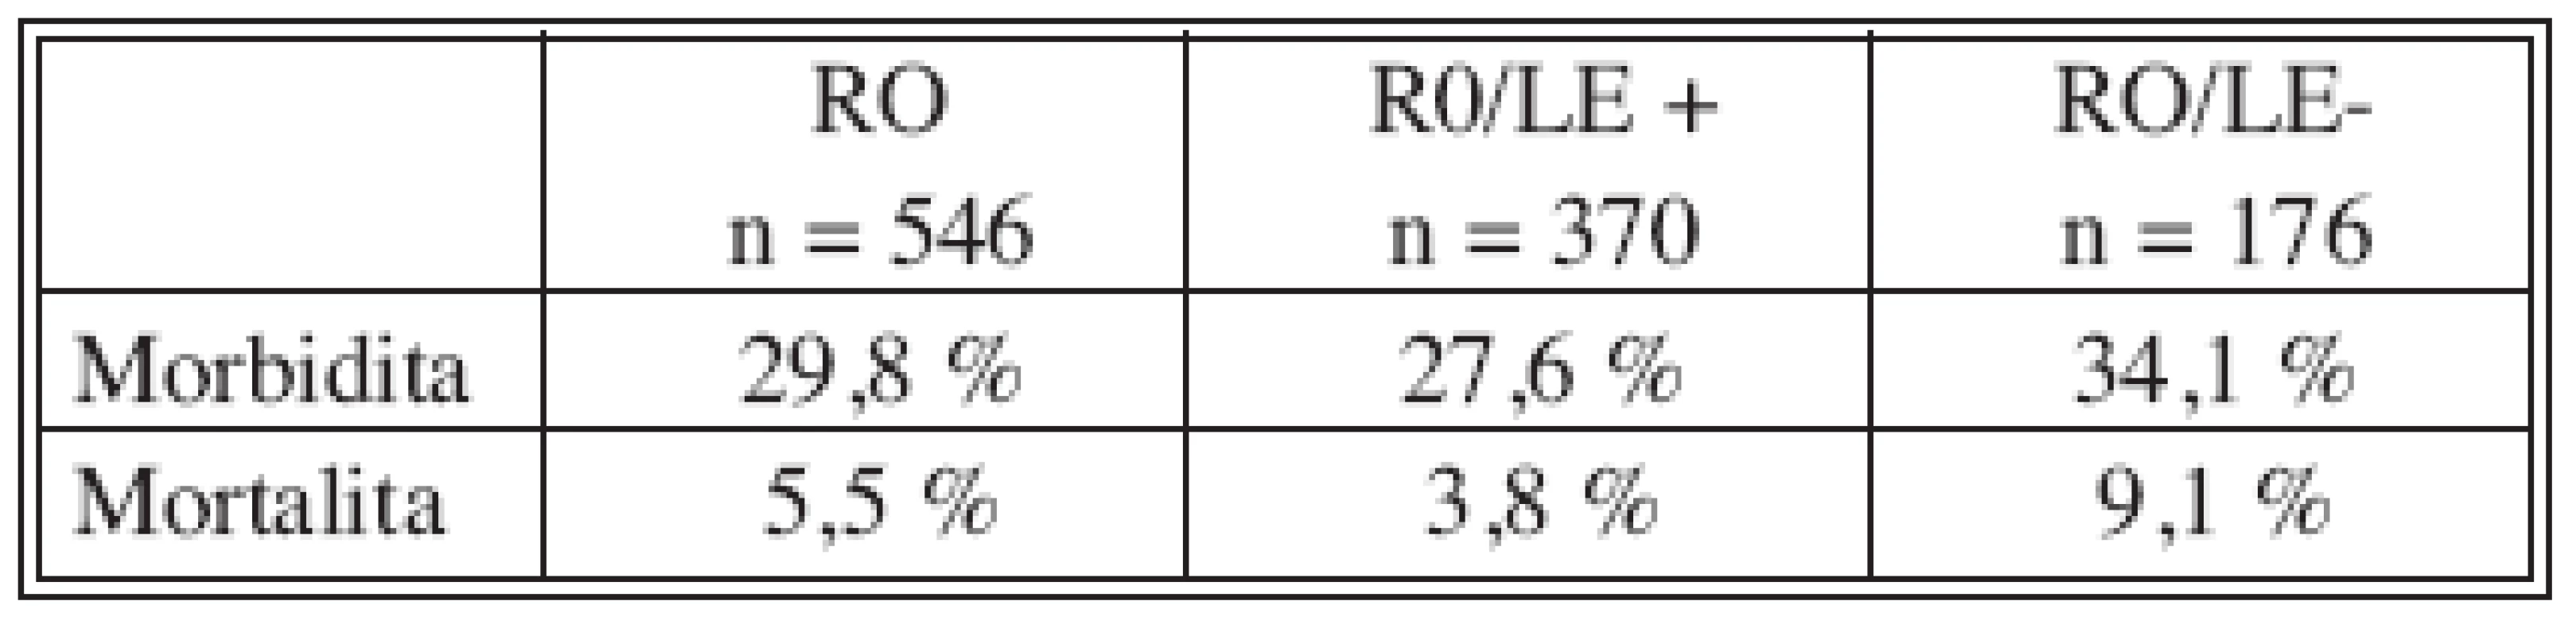 Pooperační morbidita a mortalita v souboru pacientů R0 vs. R0/LE+ vs. R0/LE-
Tab. 3. Postoperative morbidity and mortality rates in the R0 group vs. R0/LE+ vs. R0/LE-
